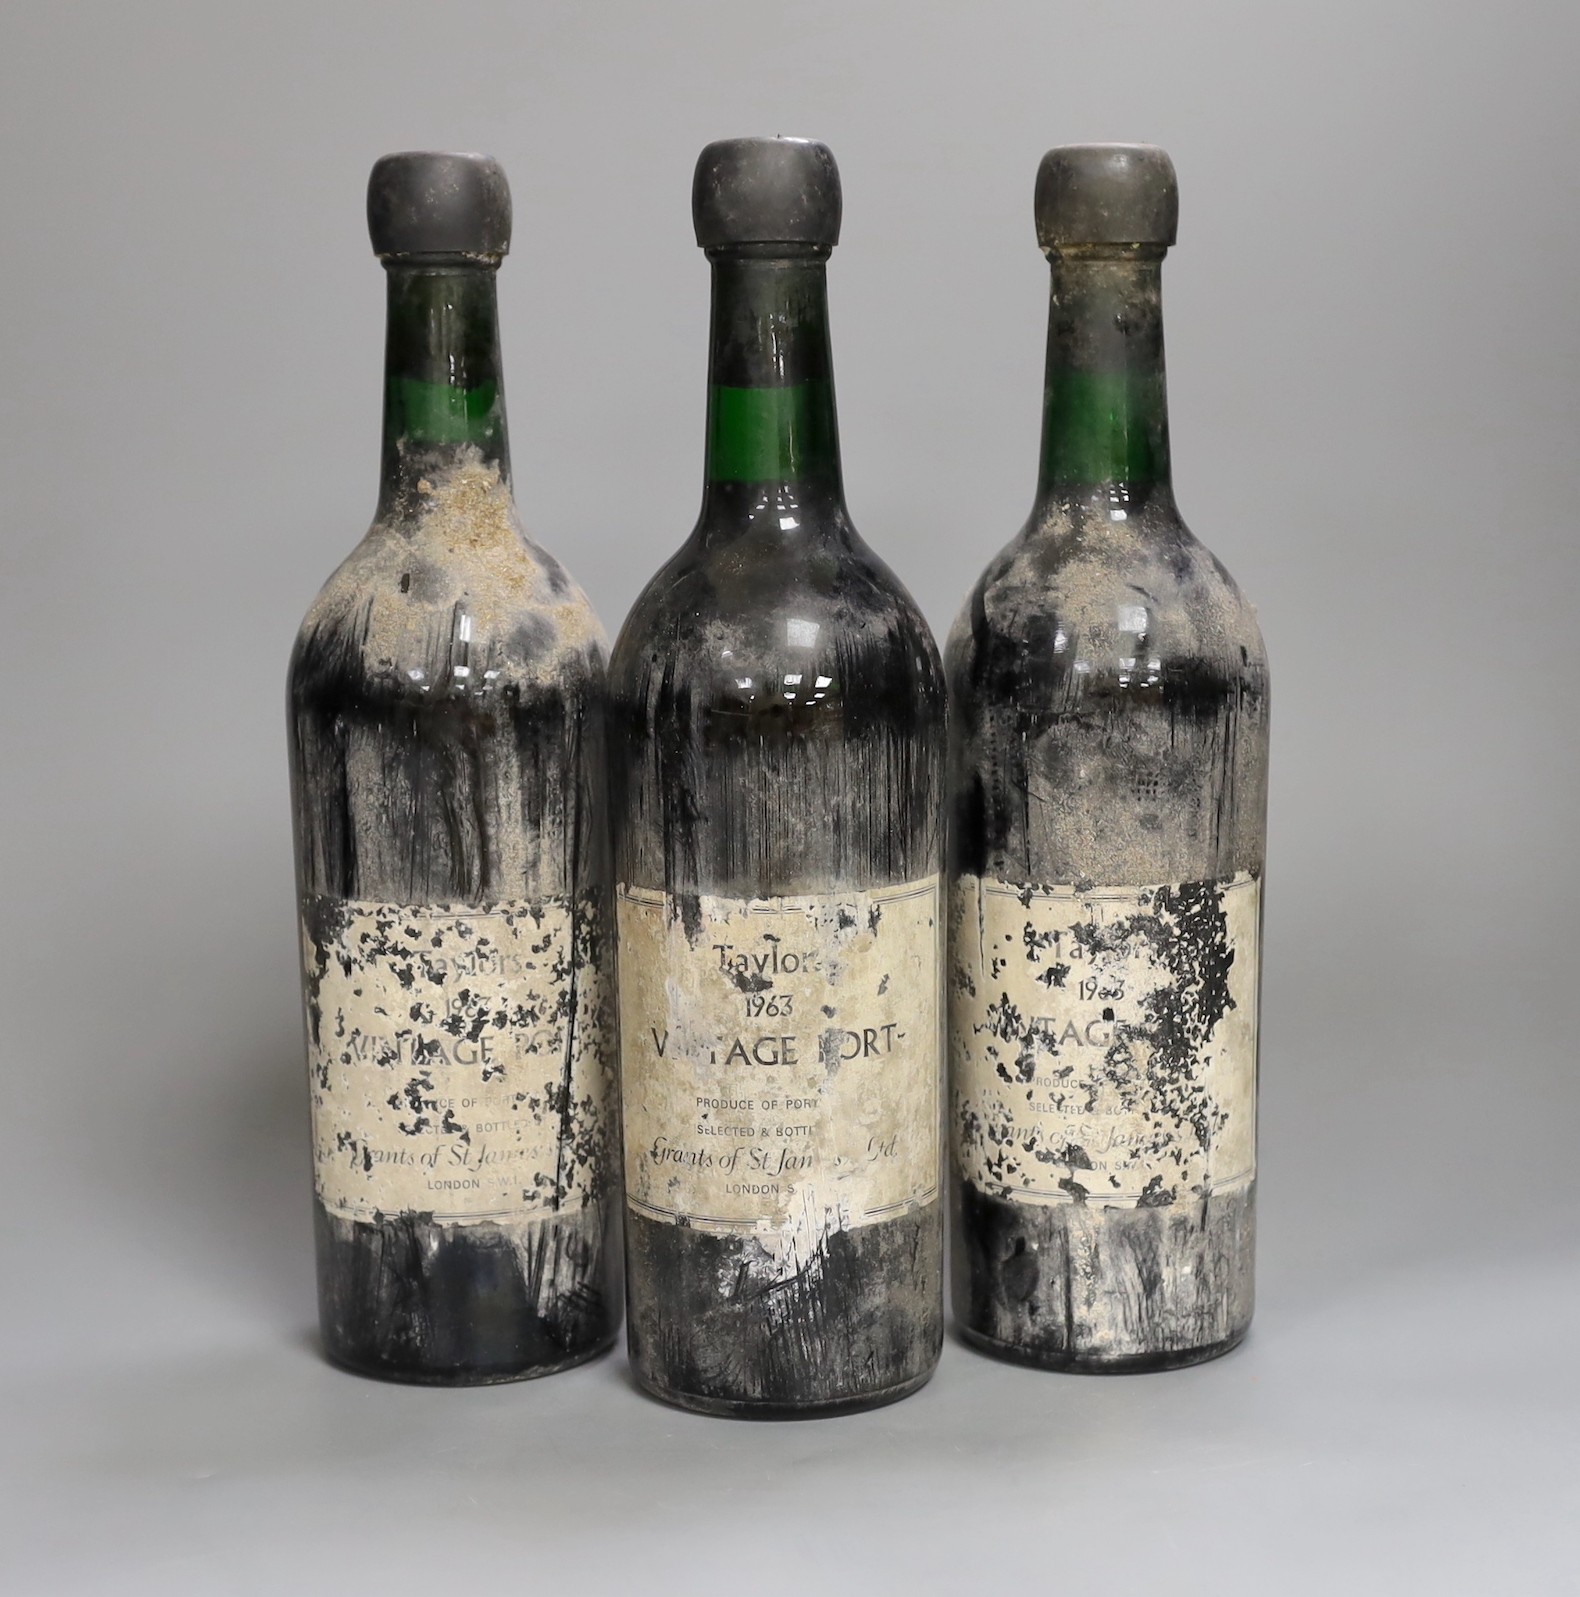 Three bottles of Taylor’s 1963 vintage port